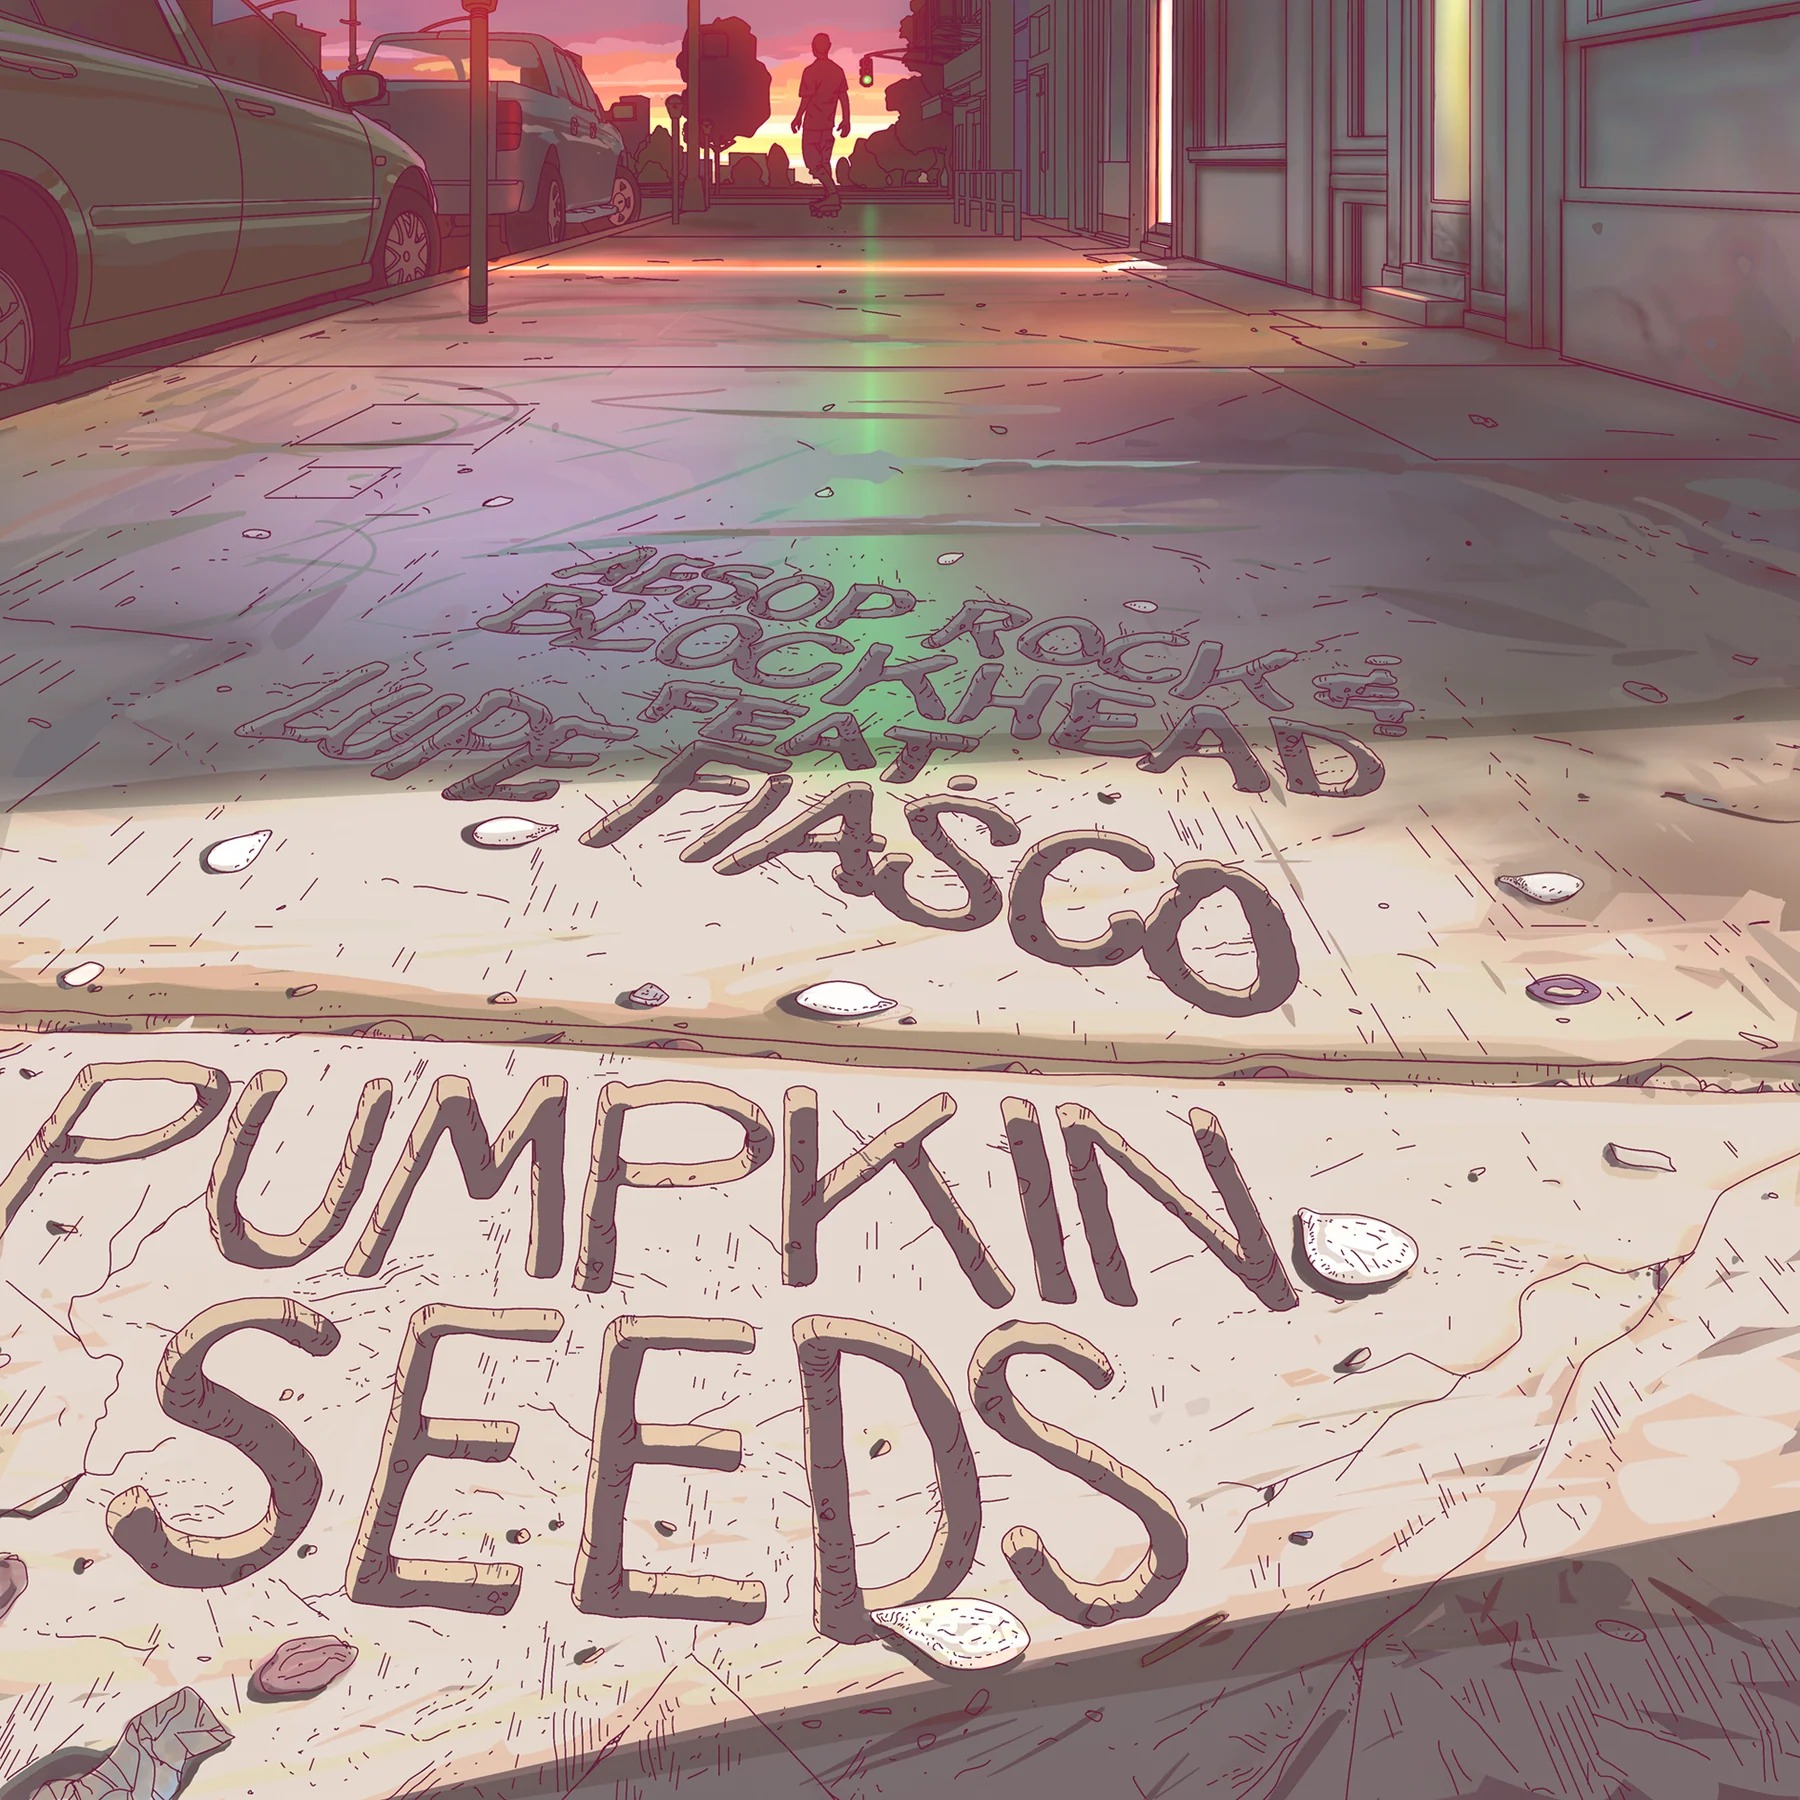 Aesop_rock_x_blockhead_pumpkin_seeds__ft._lupe_fiasco_